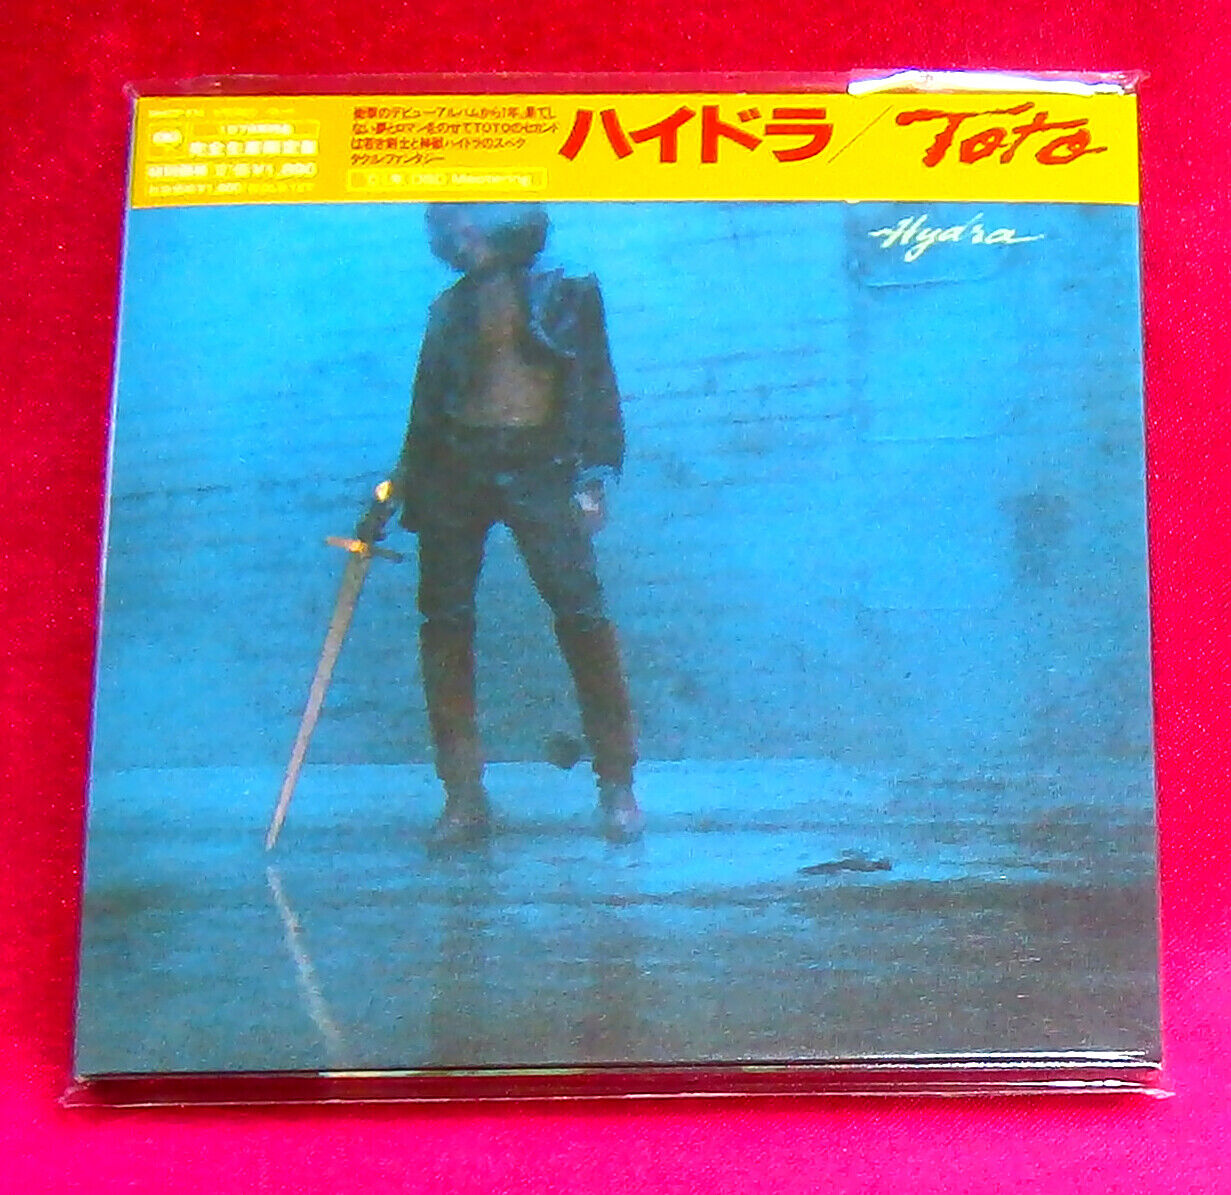 Toto Hydra MINI LP CD JAPAN MHCP-610